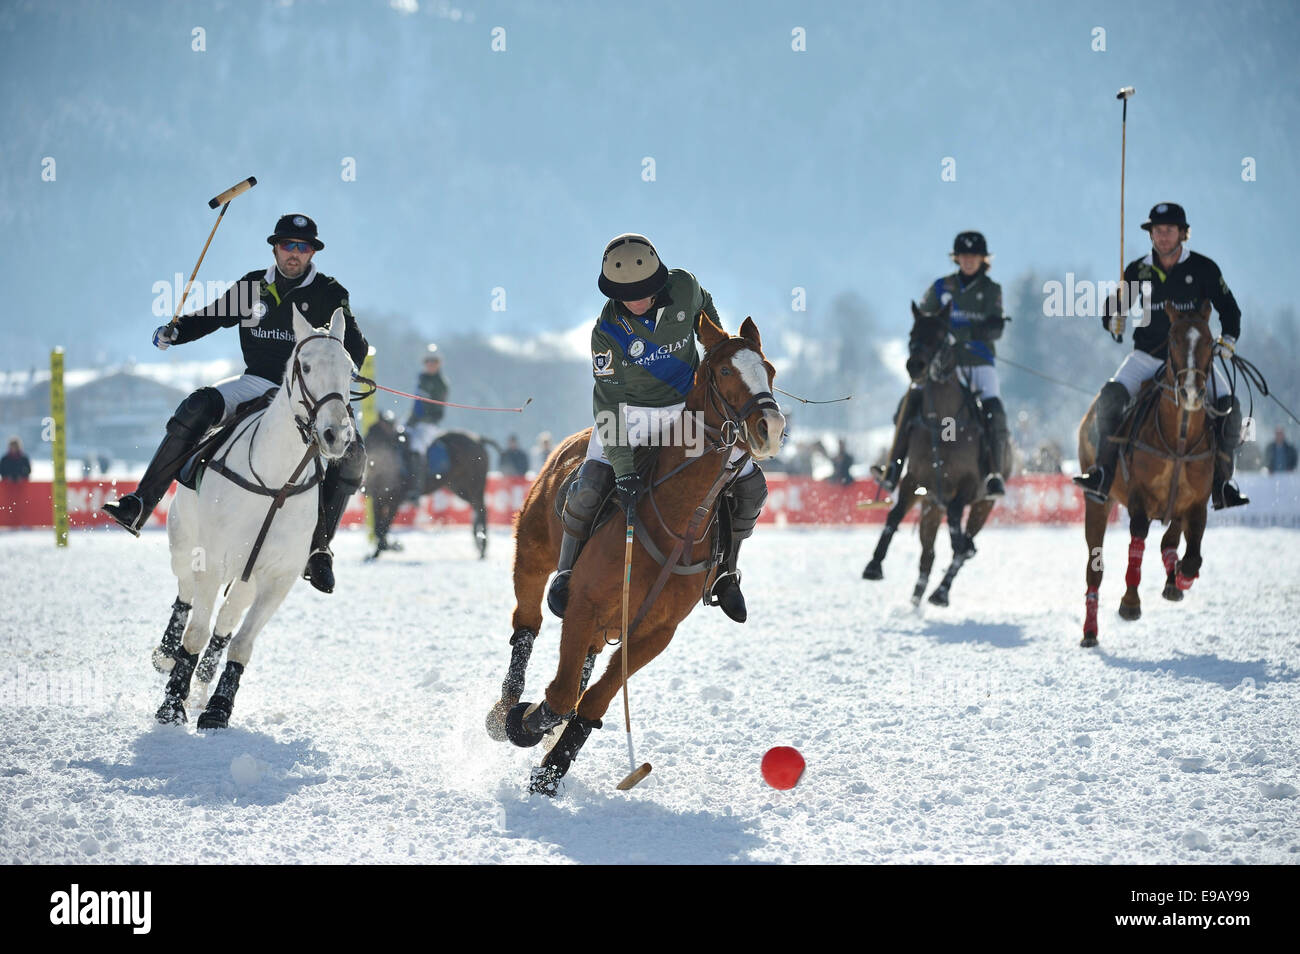 Team Parmigiani, gray, versus Team Valartis Bank, black, Polo on Snow, Polo tournament, 11th Valartis Bank Snow Polo World Cup Stock Photo